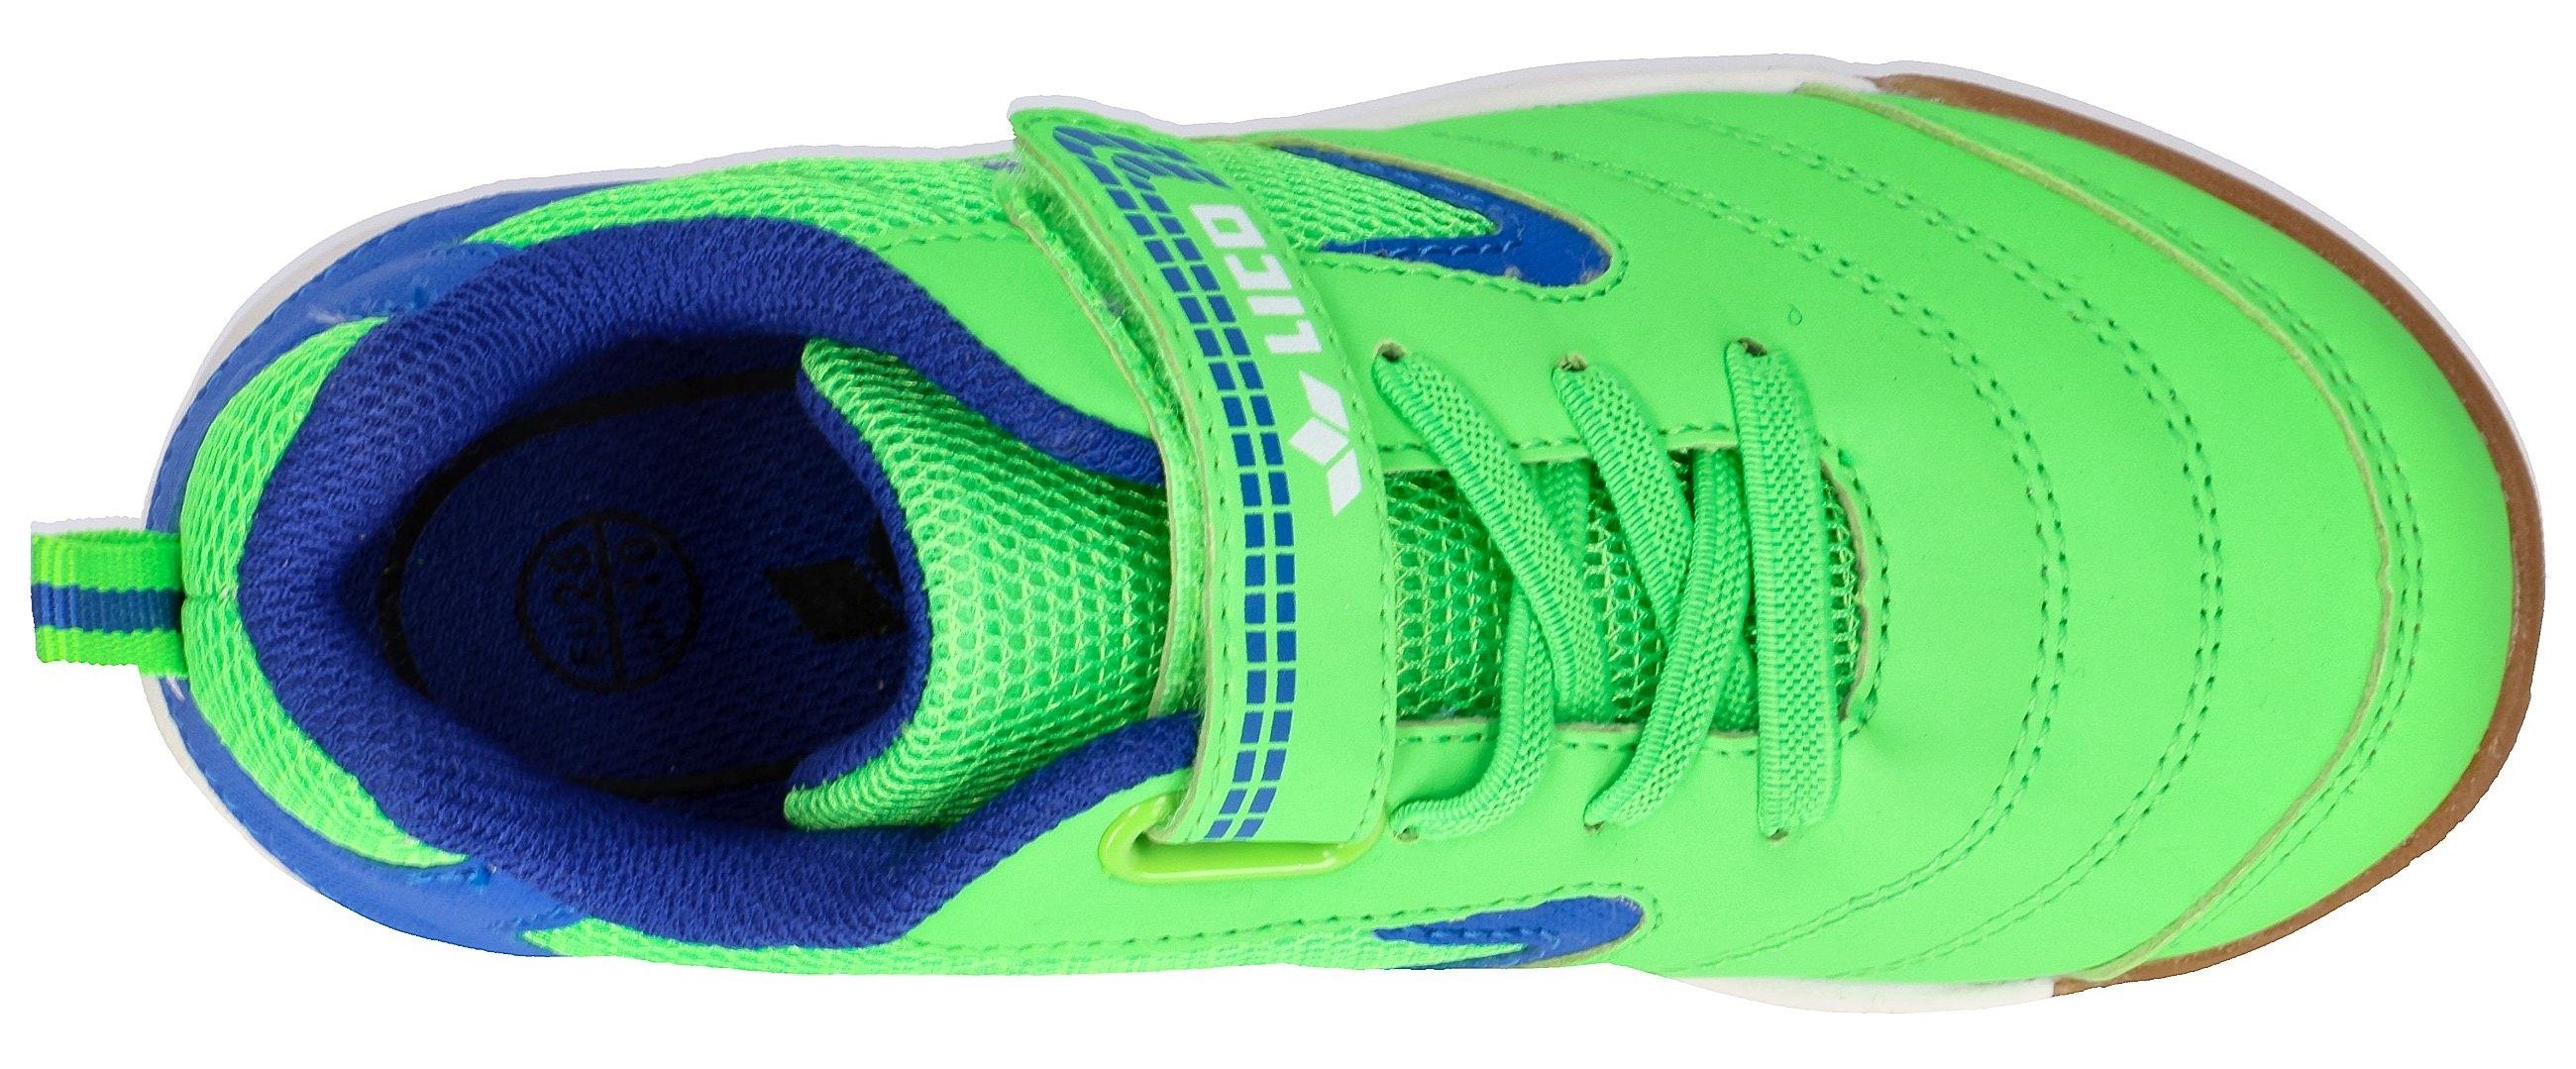 Lico Ari VS Laufsohle heller grün-blau WMS Sneaker mit